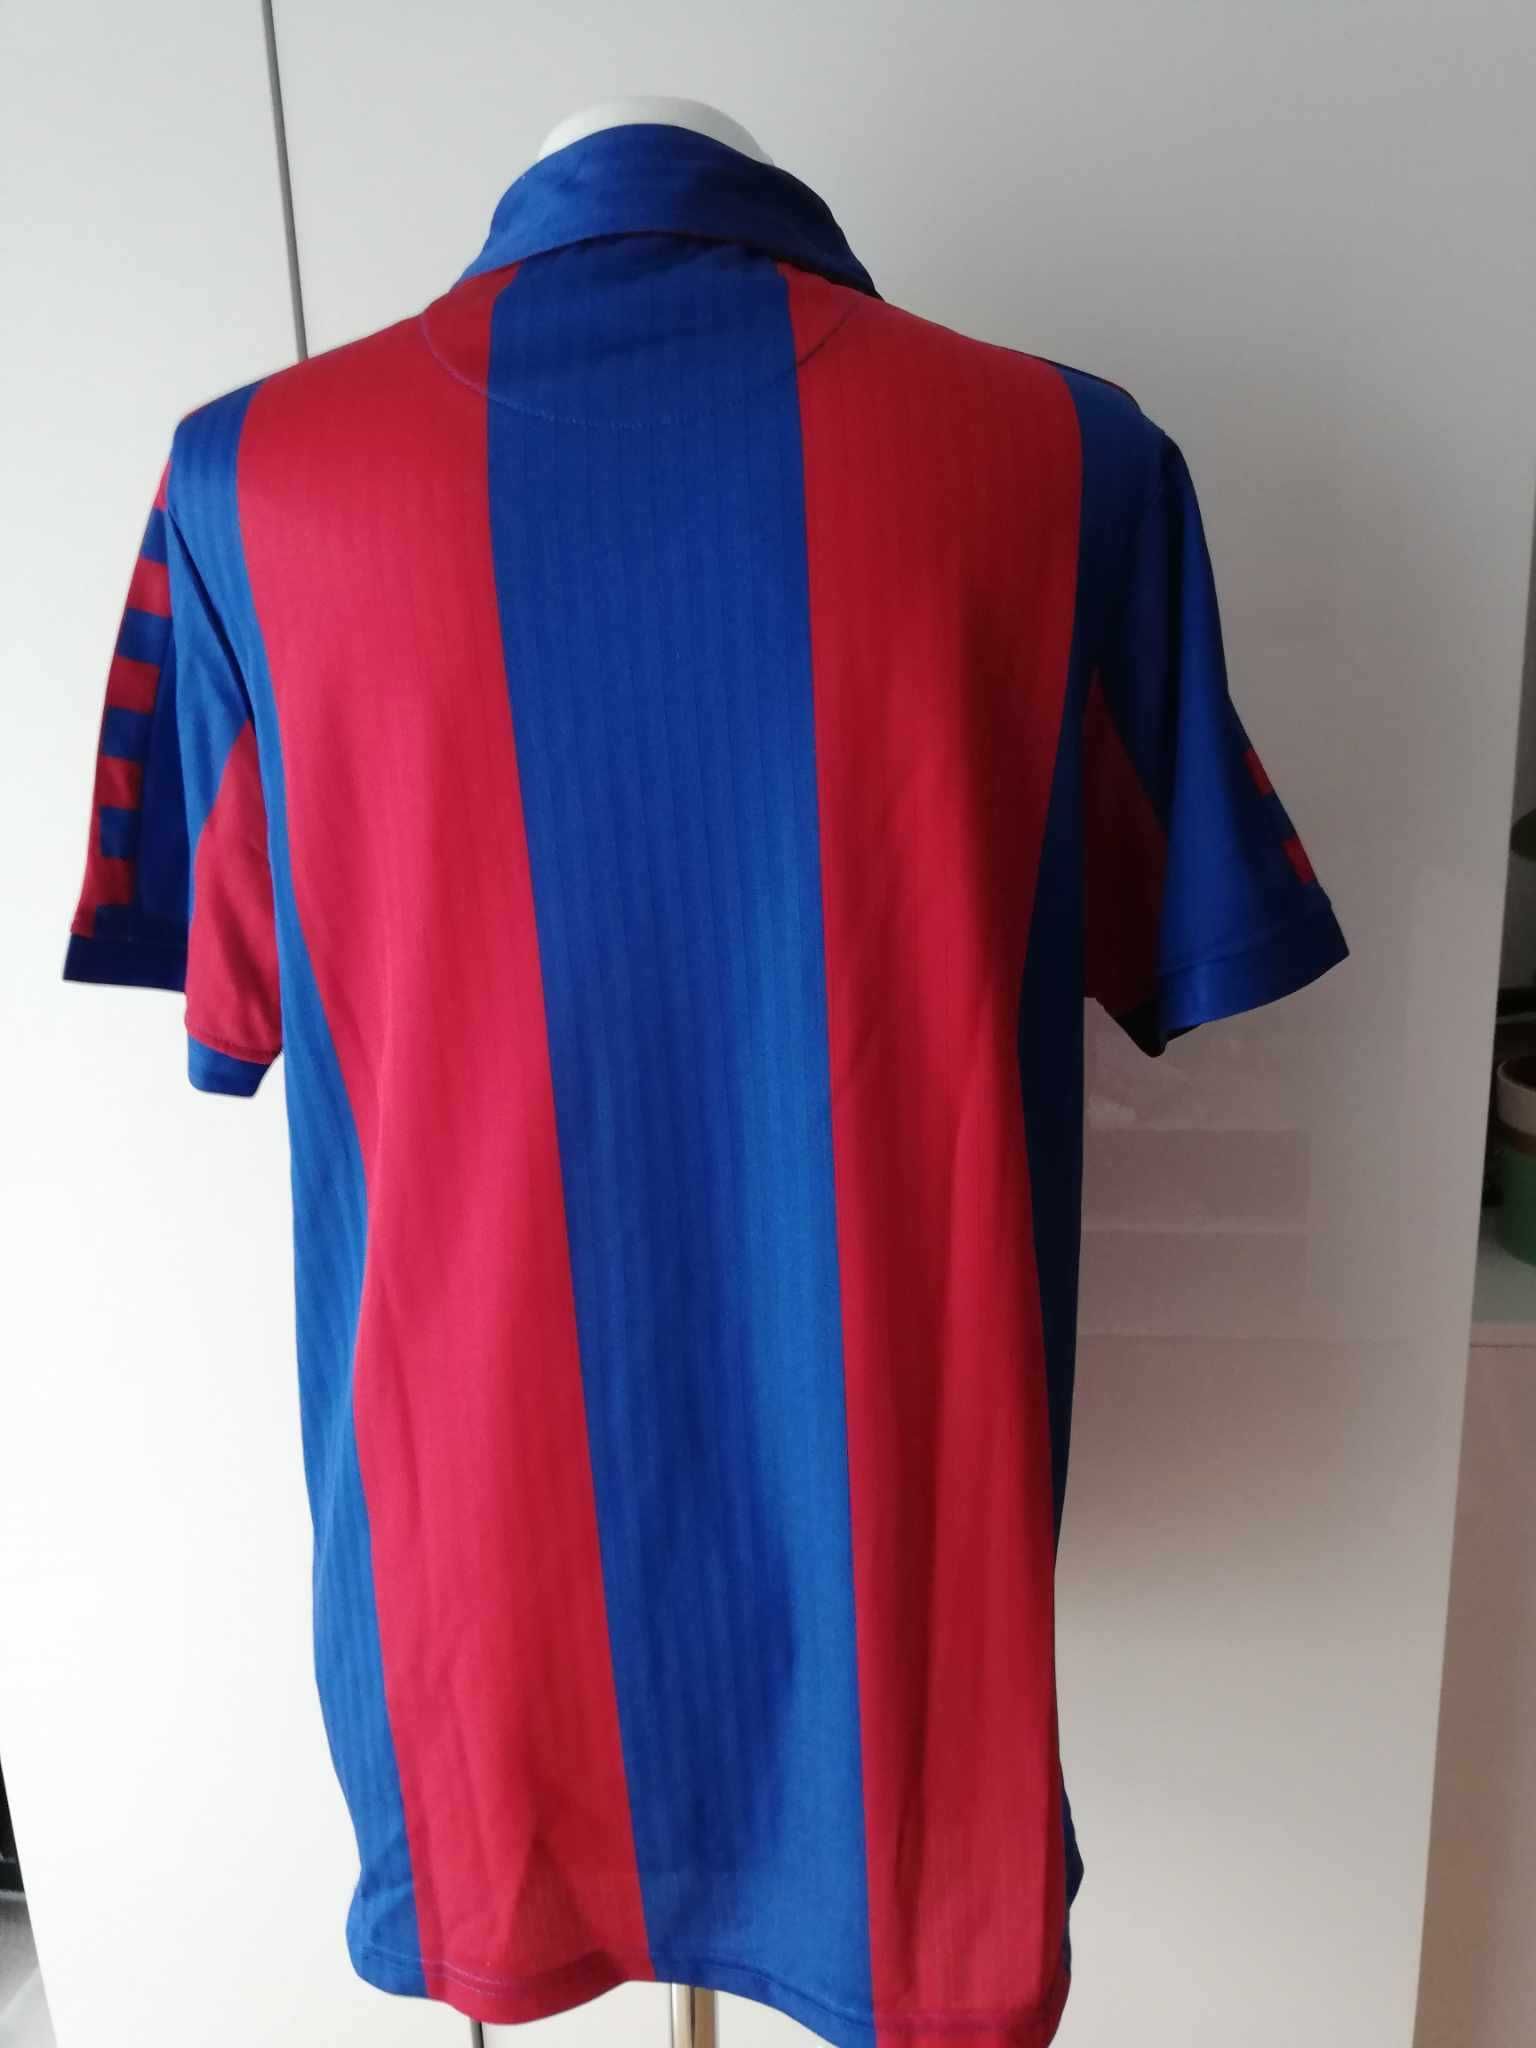 Koszulka piłkarska FCB Barcelona roz. M